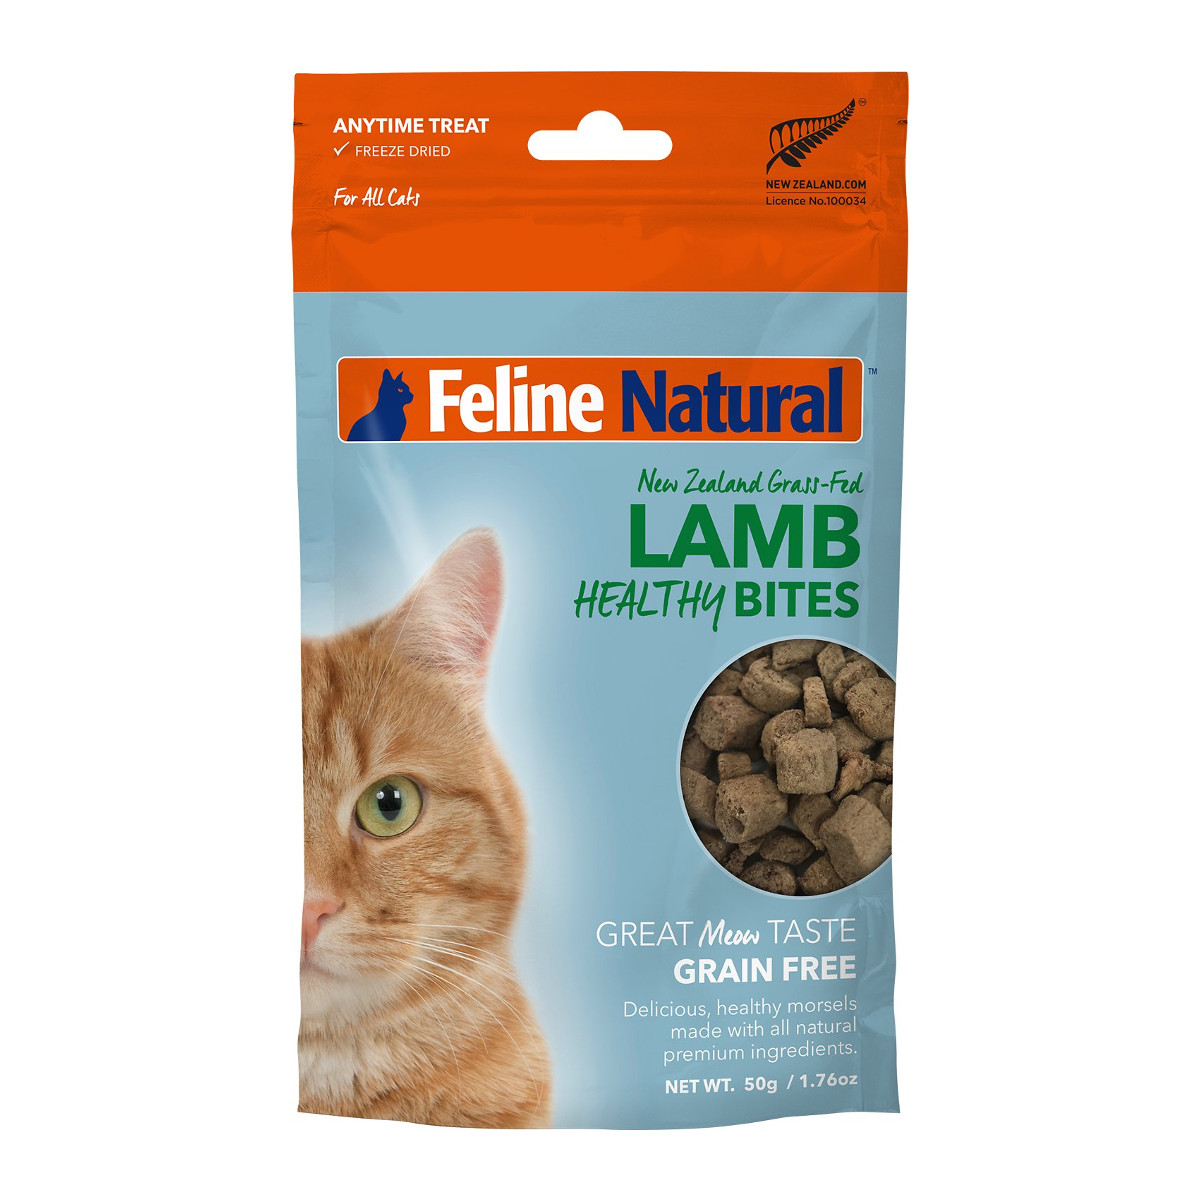 Feline Natural Lamb Healthy Bites GrainFree FreezeDried Cat Treats 1